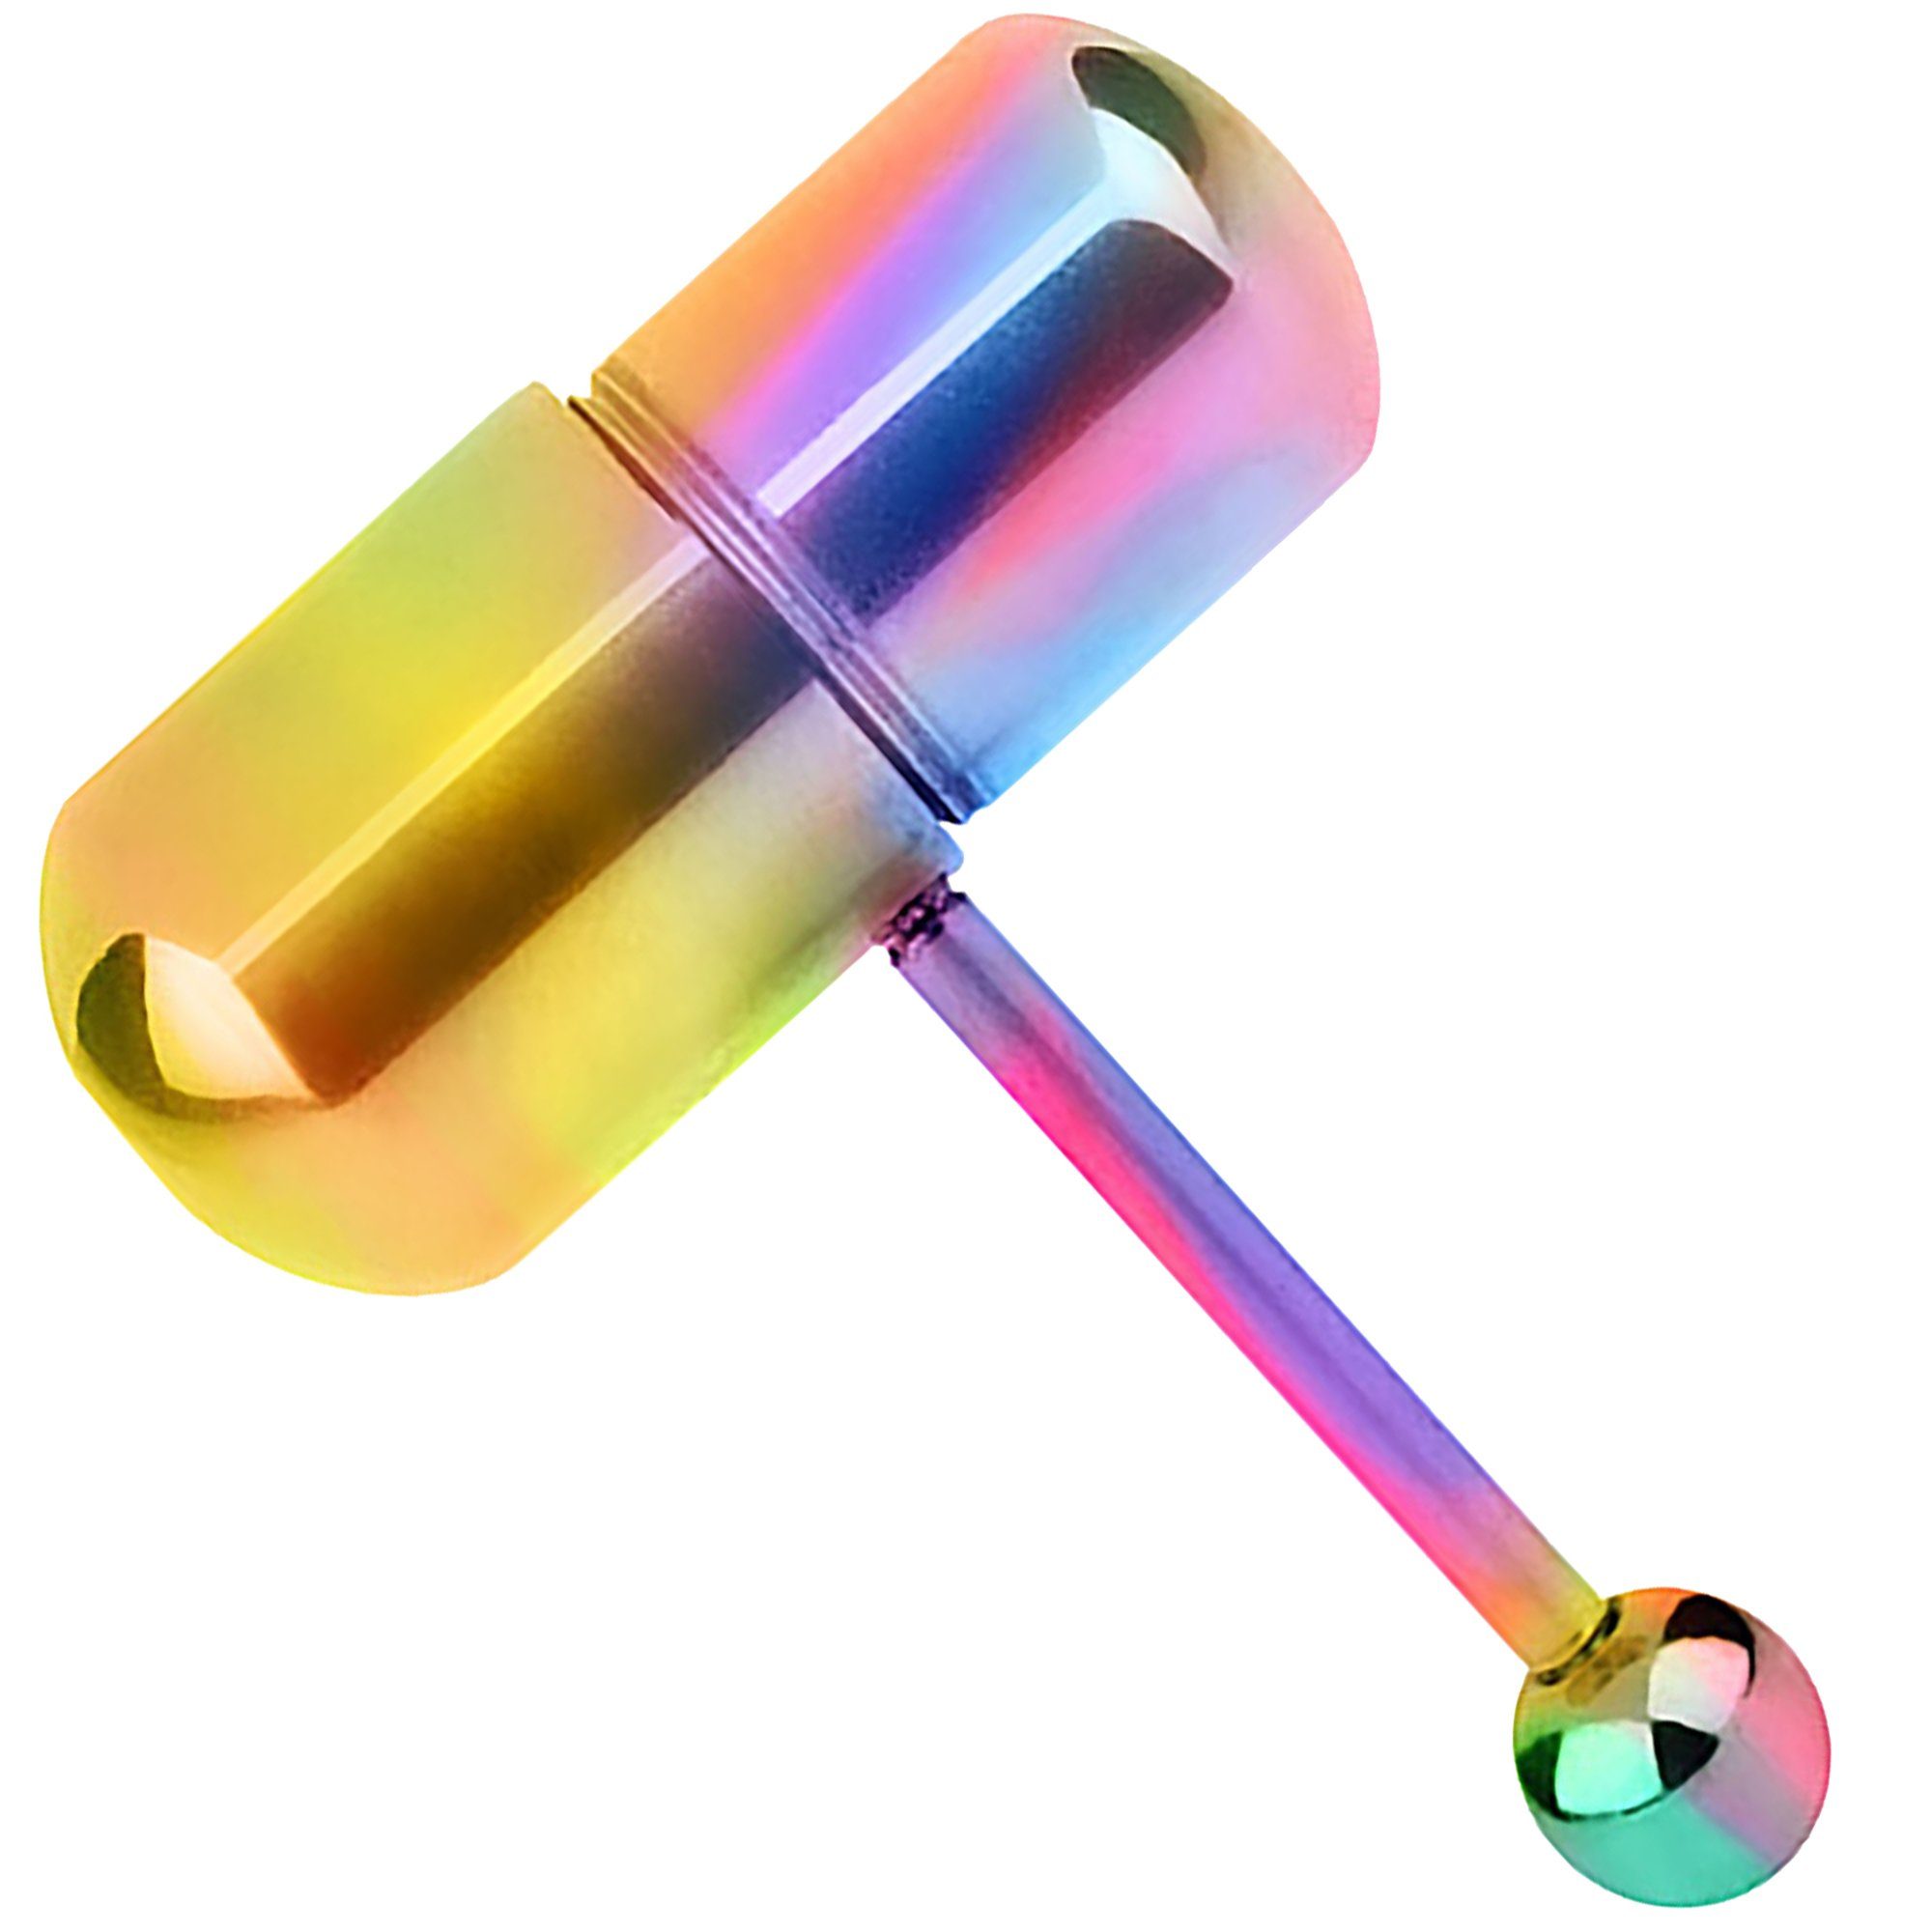 Piercingfaktor Fun, Vibrierendes Piercing-Set Rainbow Hantel Taffstyle Zungenpiercing Stecker Kugel Oral Tragus Helix Ohrpiercing Intim Stab Barbell